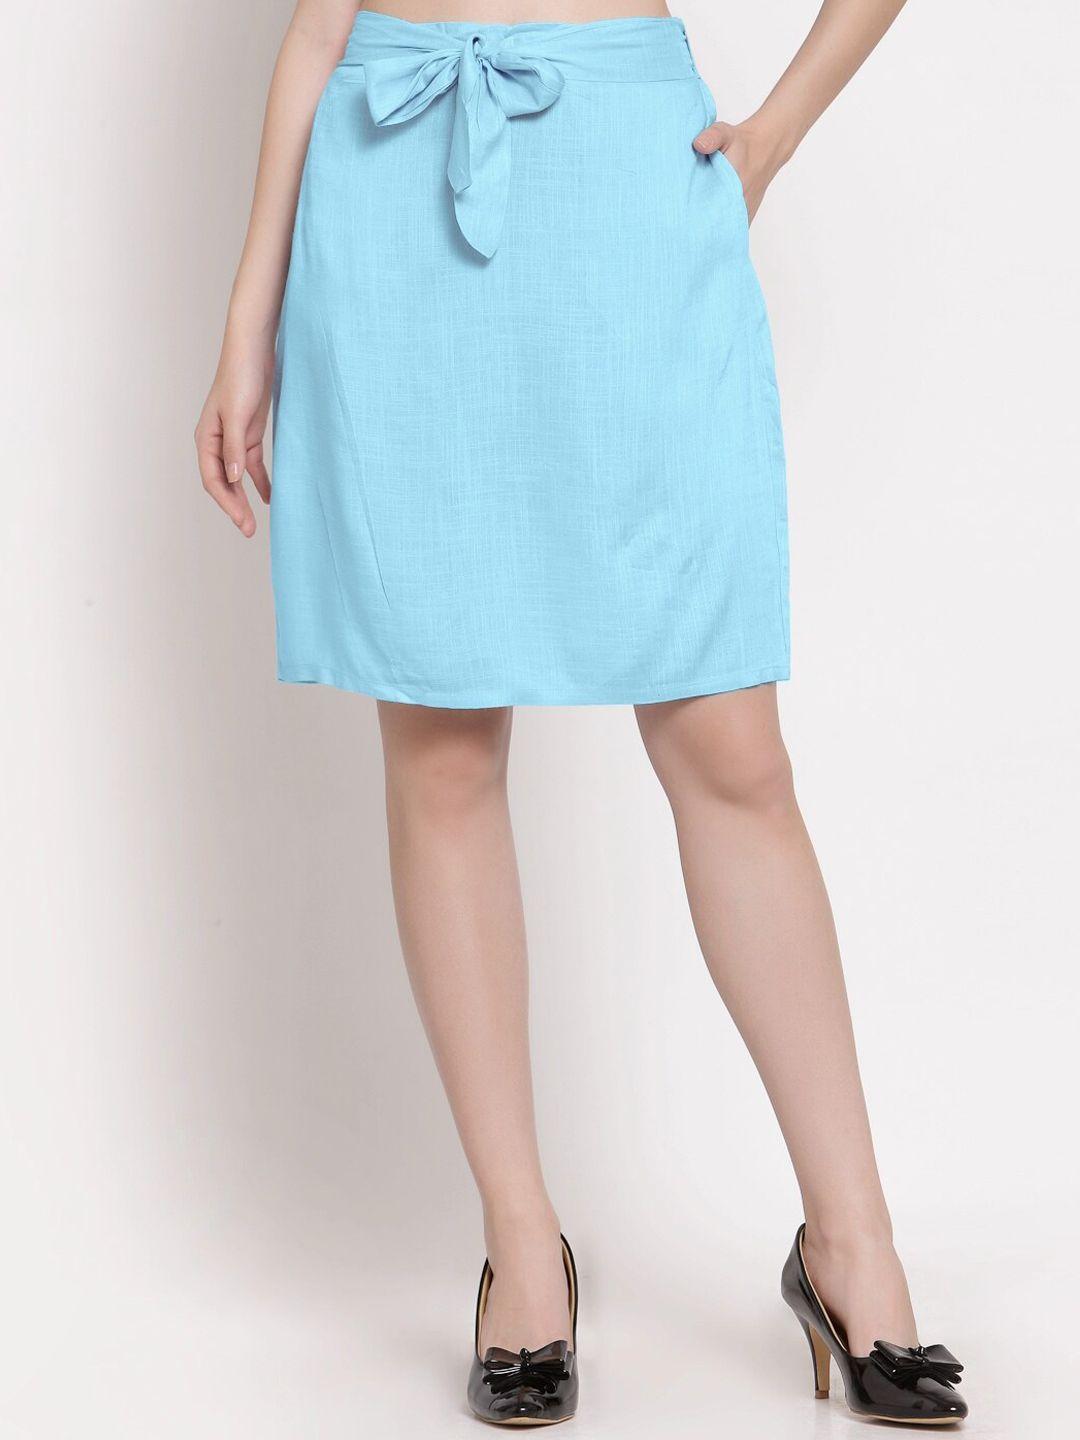 patrorna-women-plus-size-blue-skirt